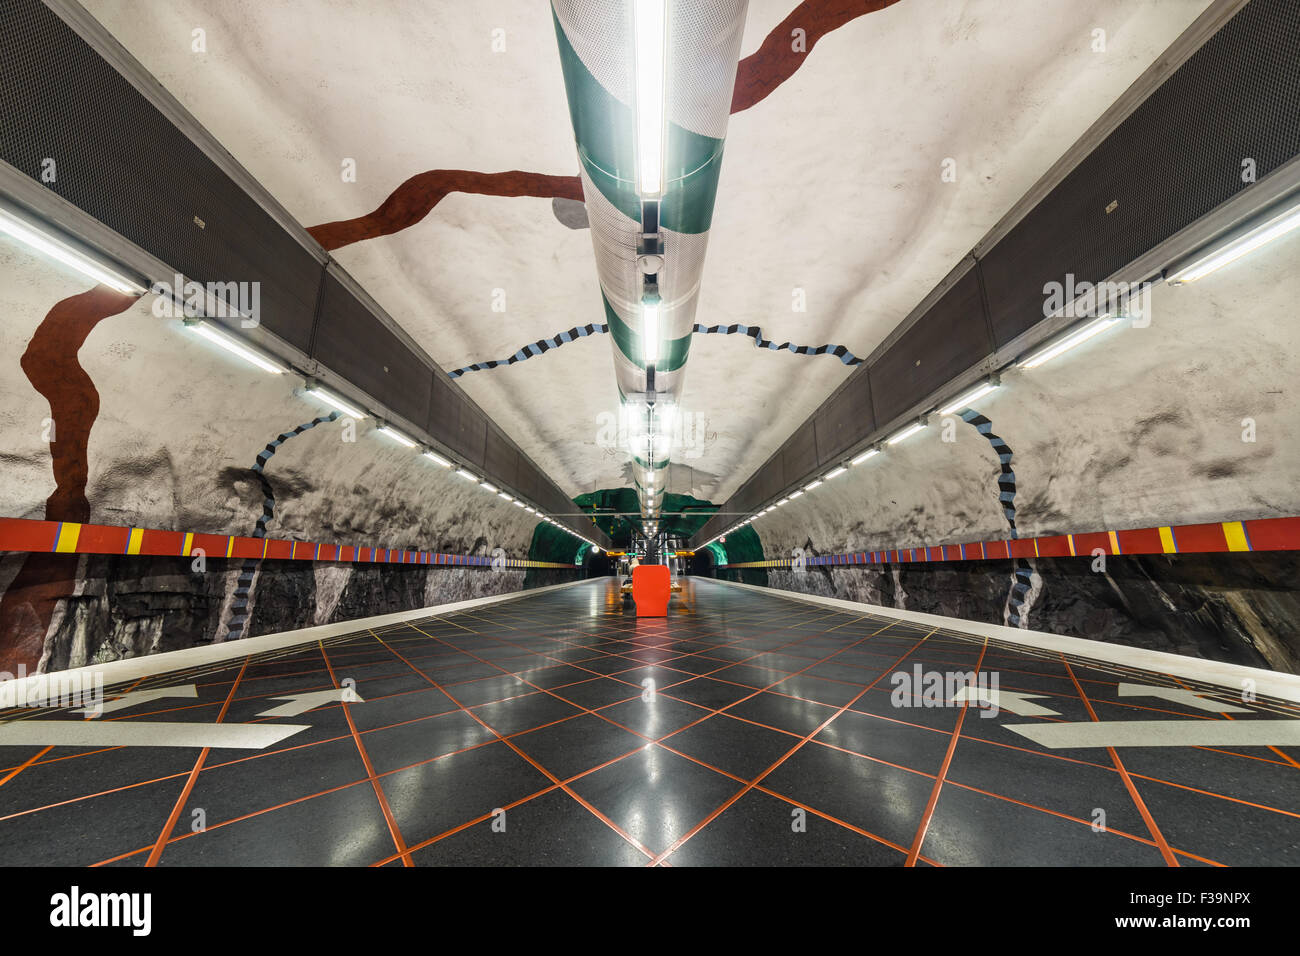 Inside Huvudsta subway station in Stockholm Tunnelbana Stock Photo